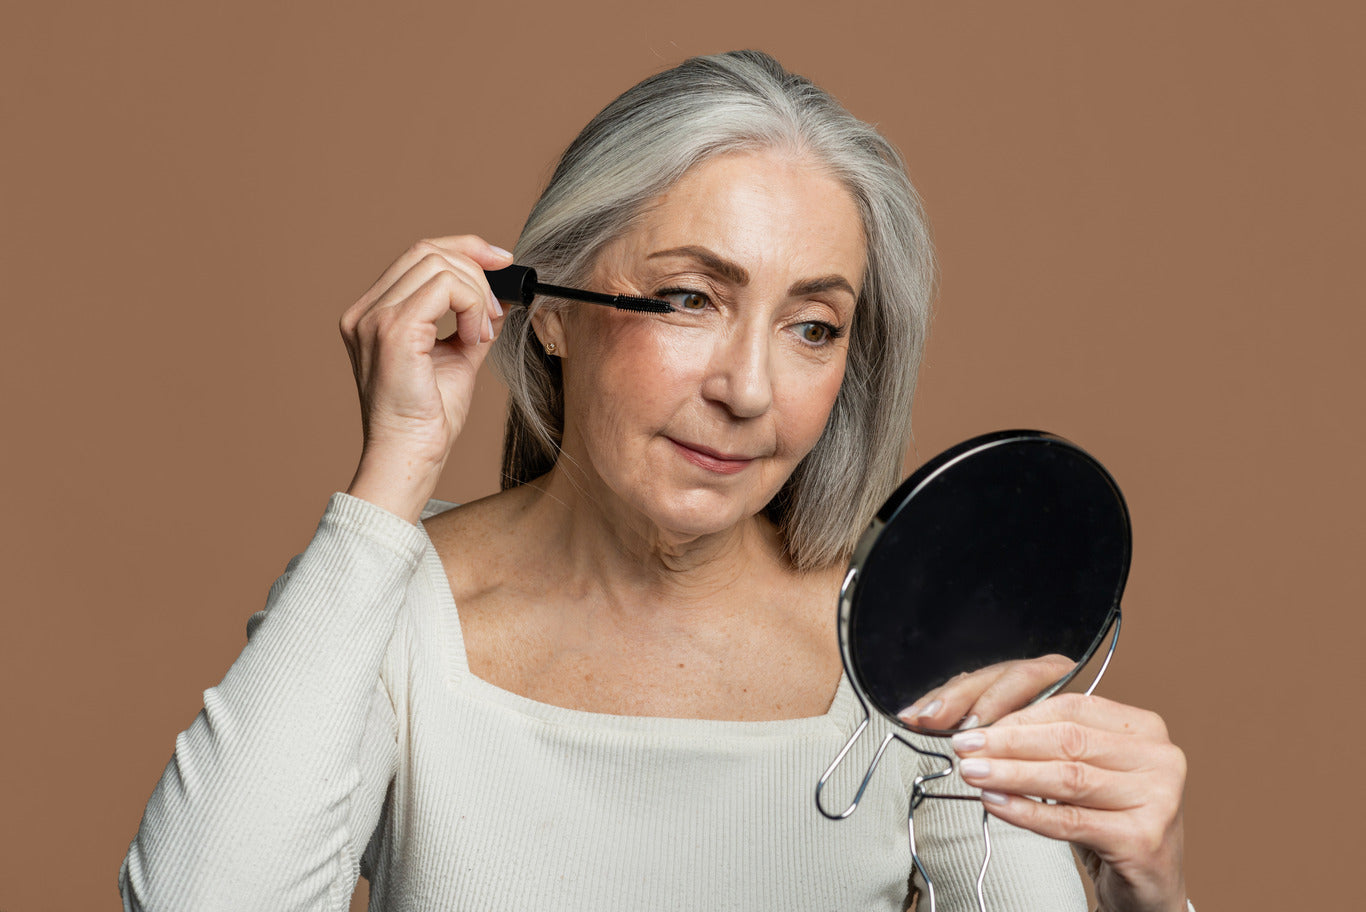 Older woman applying mascara using small mirror